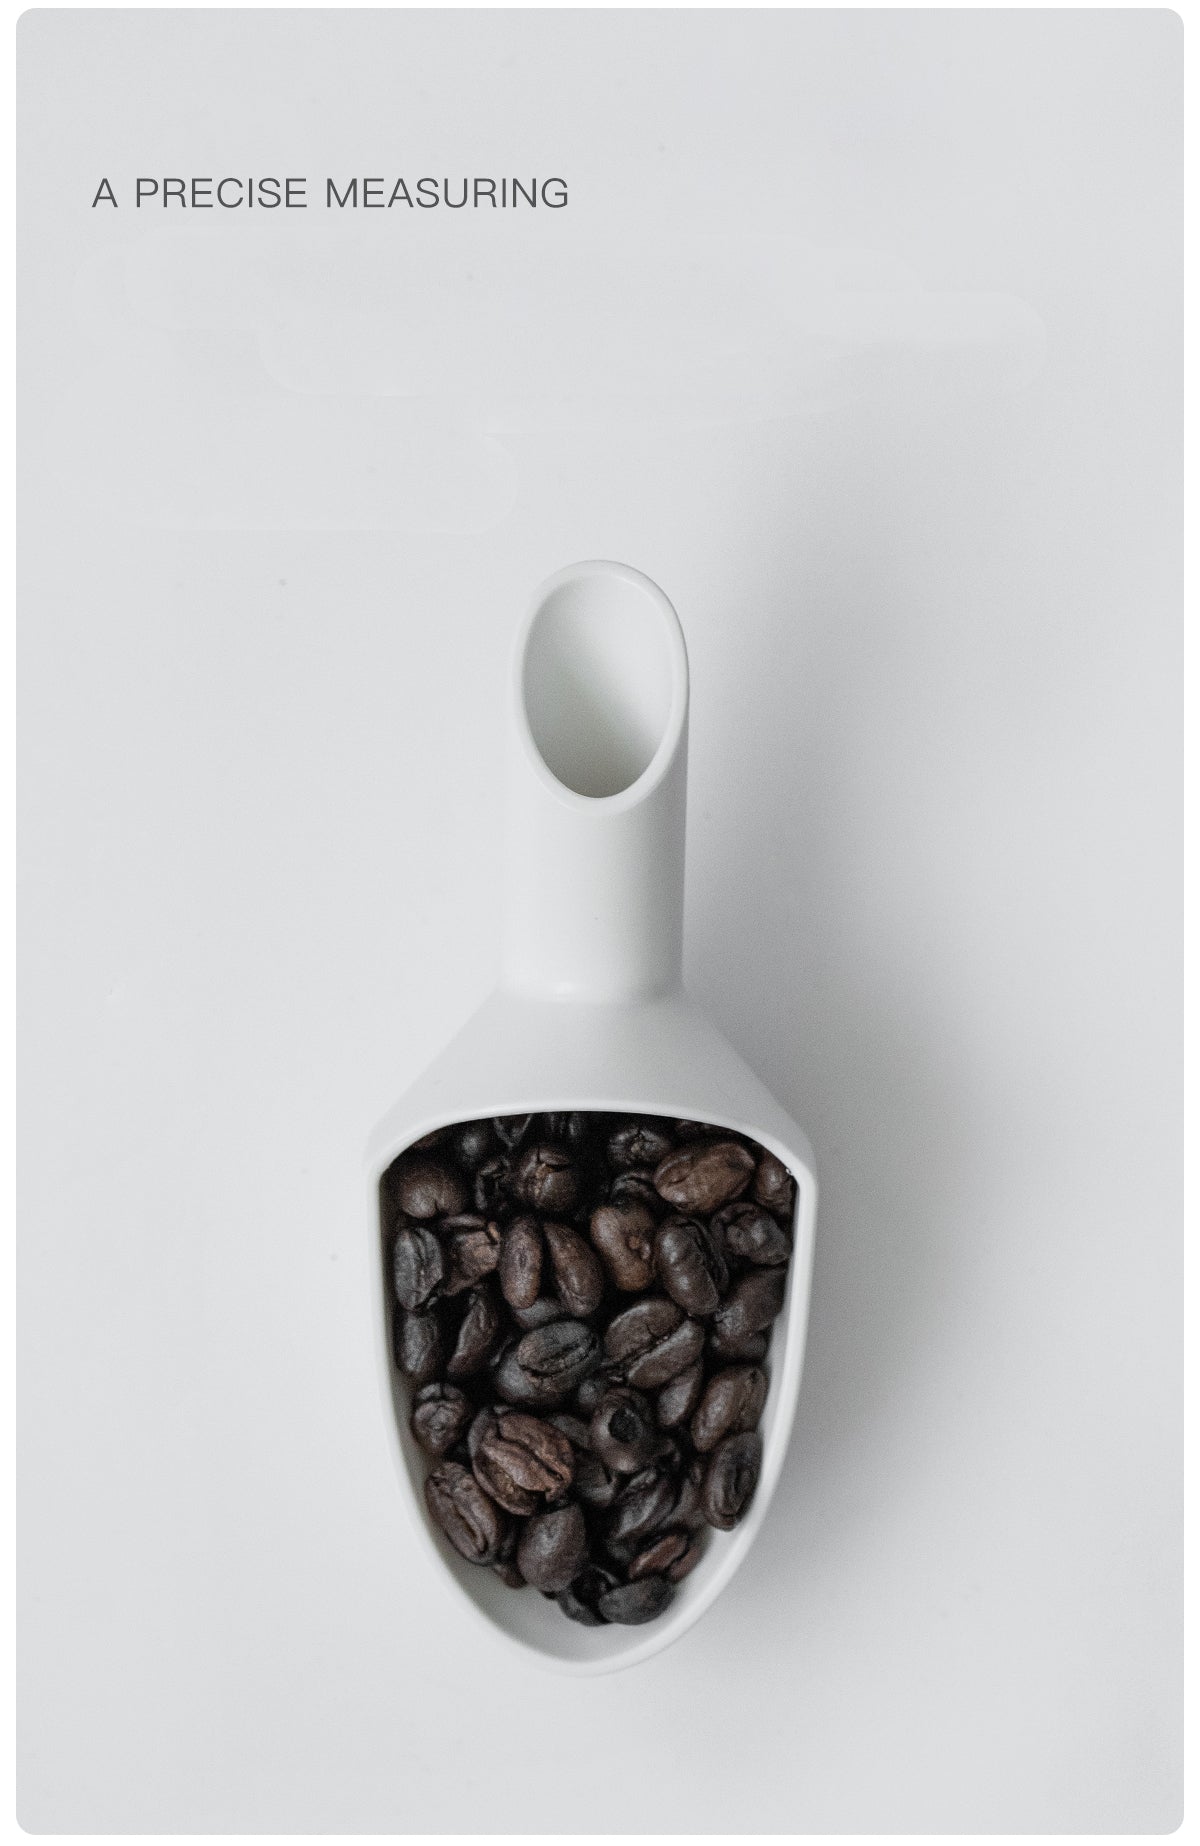 Coffee bean shovel-shaped measuring spoon